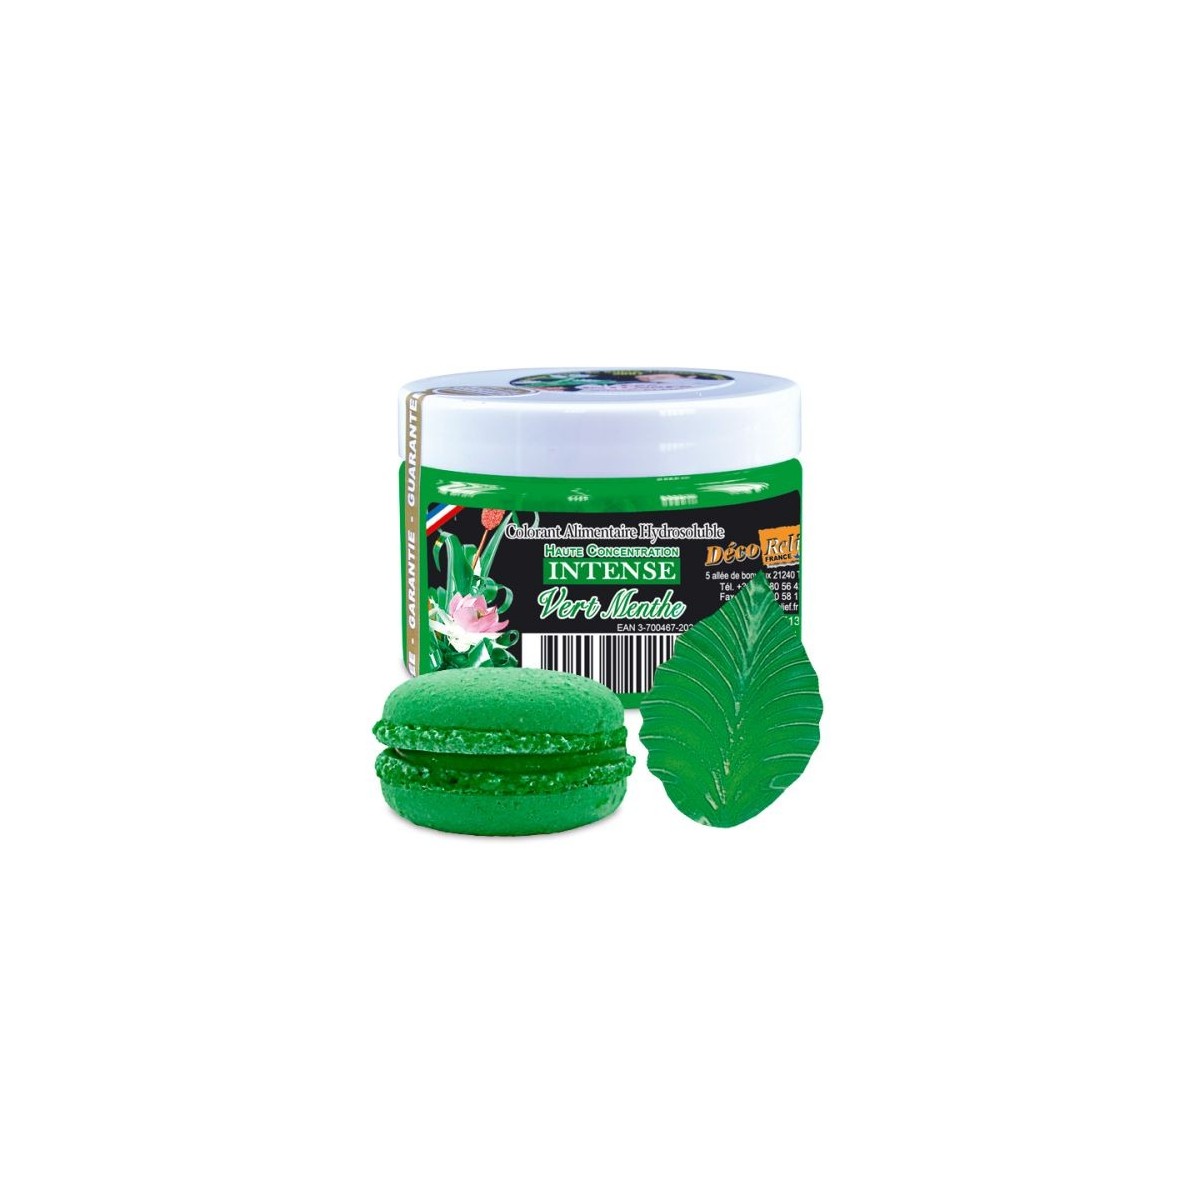 Colorant alimentaire vert menthe liquide hydrosoluble